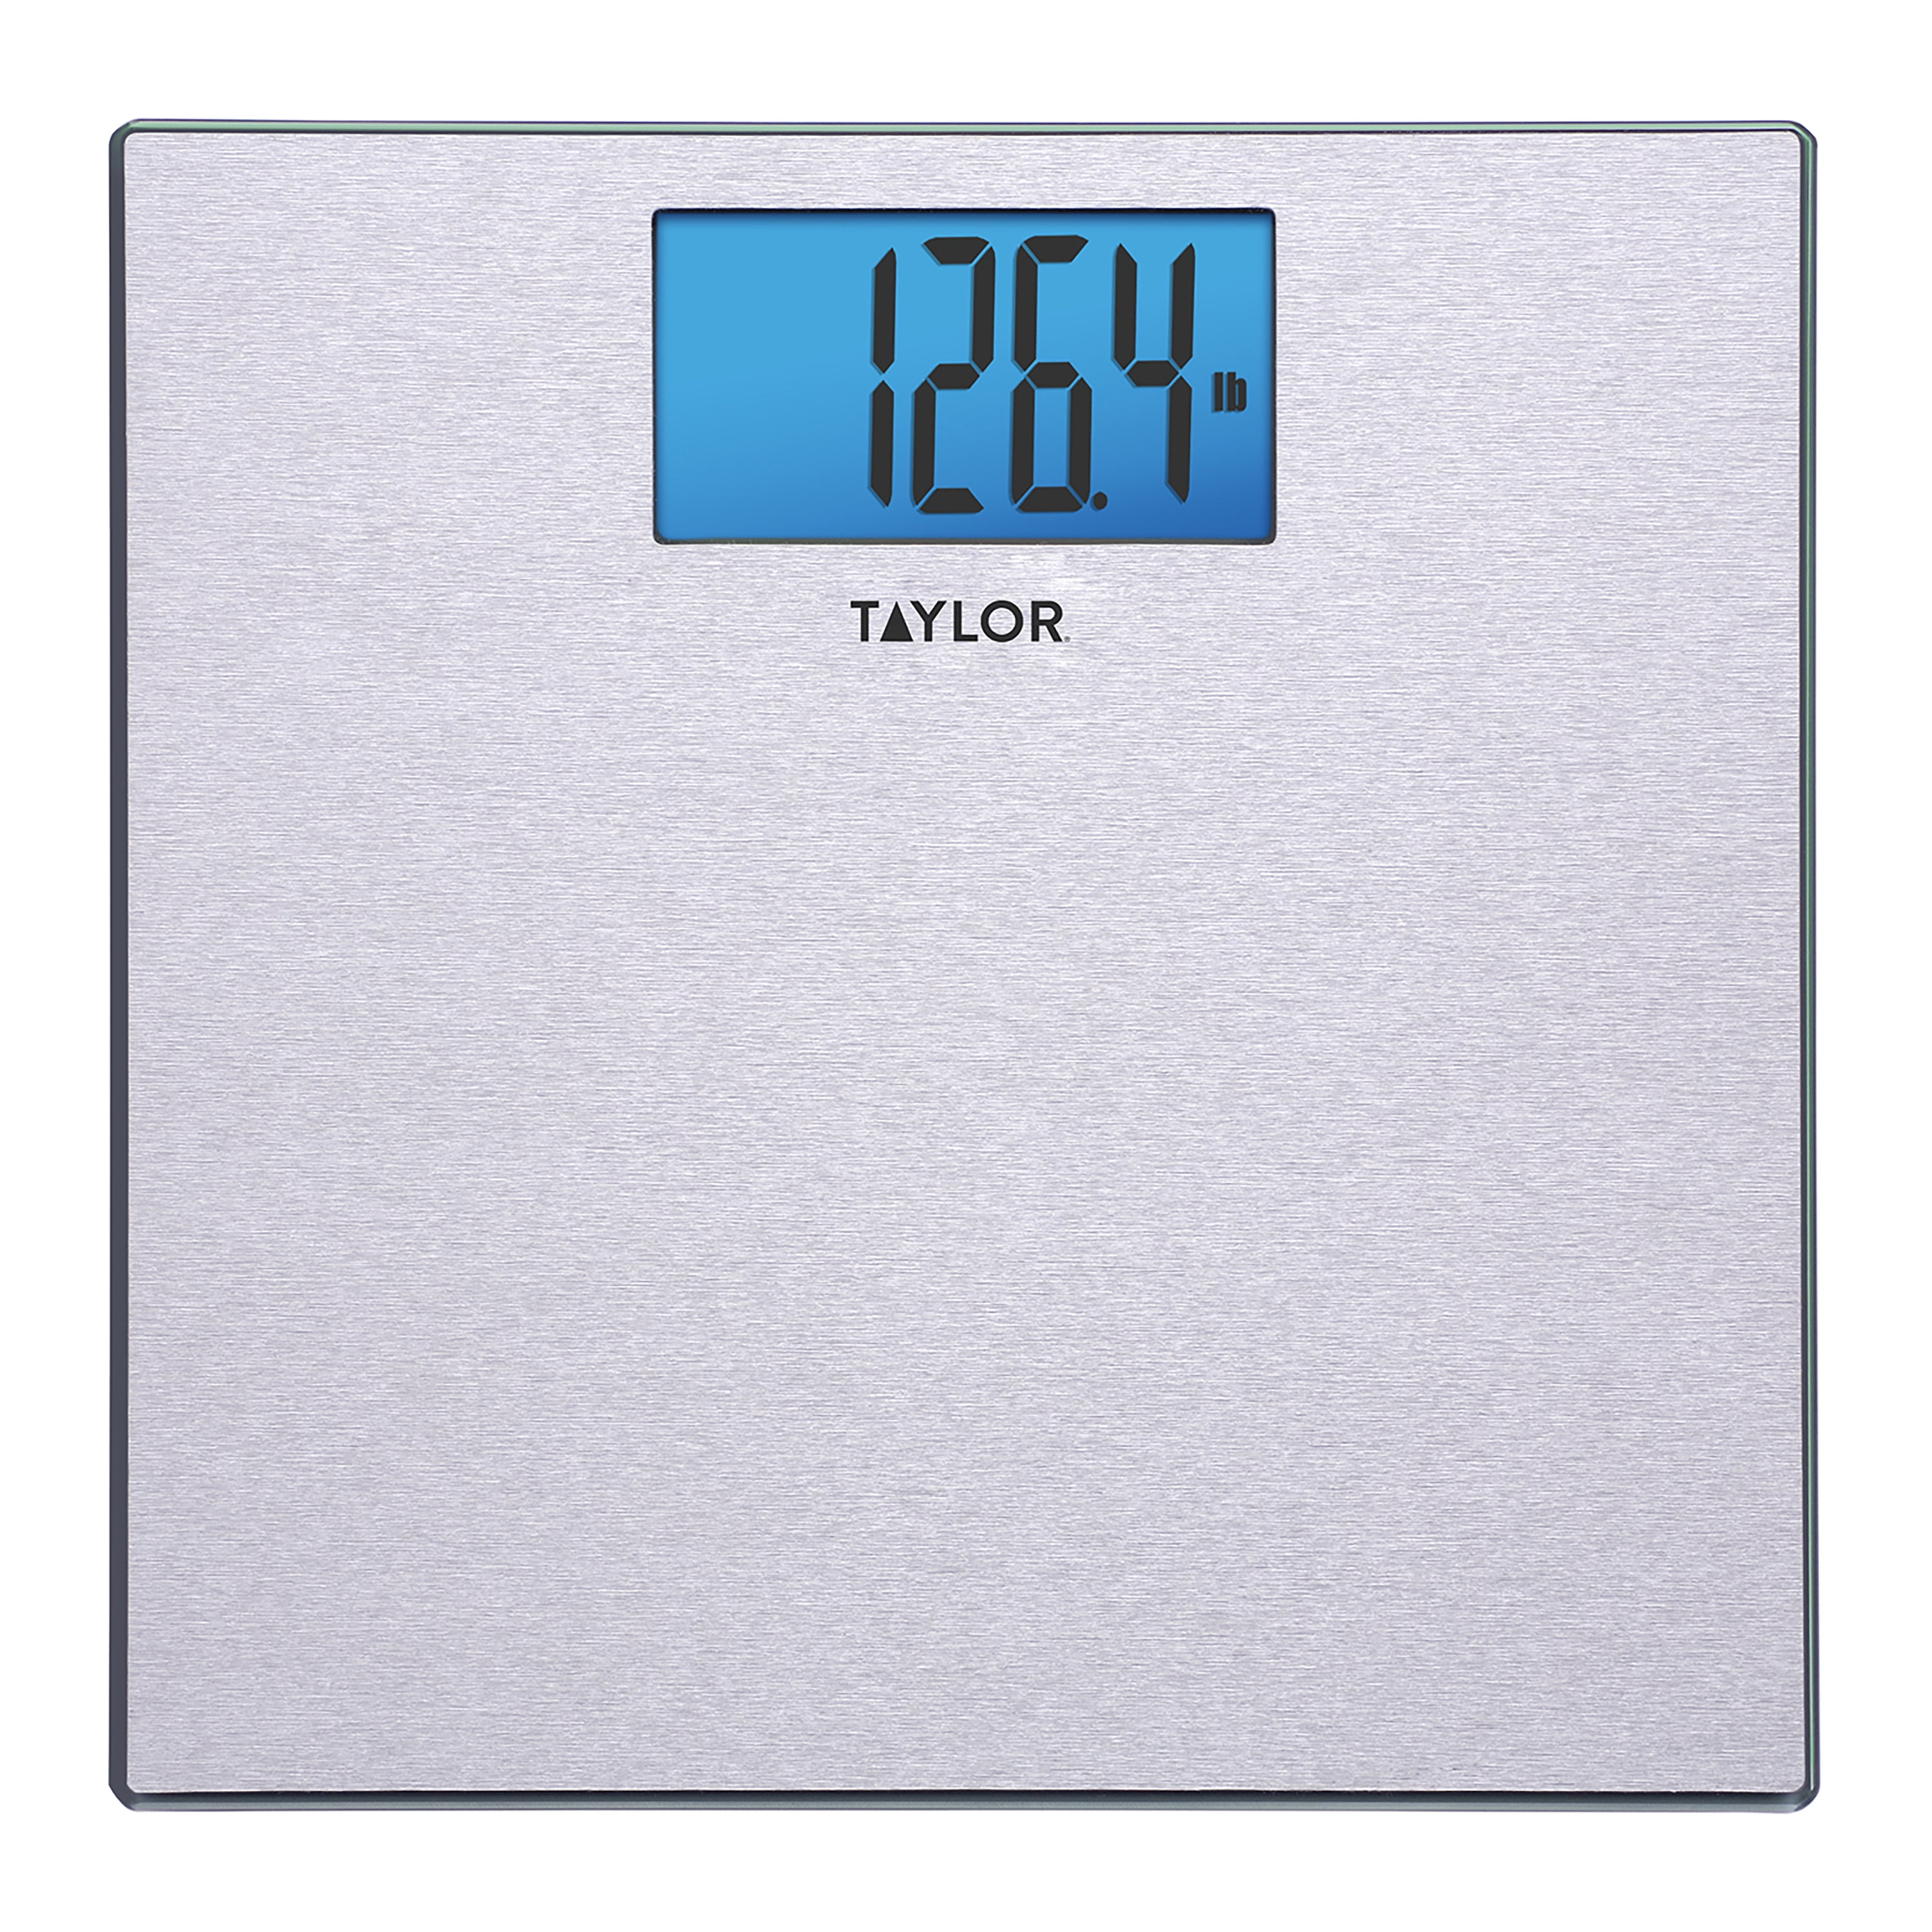 Taylor 7410 Bl High Capacity Bath Scale